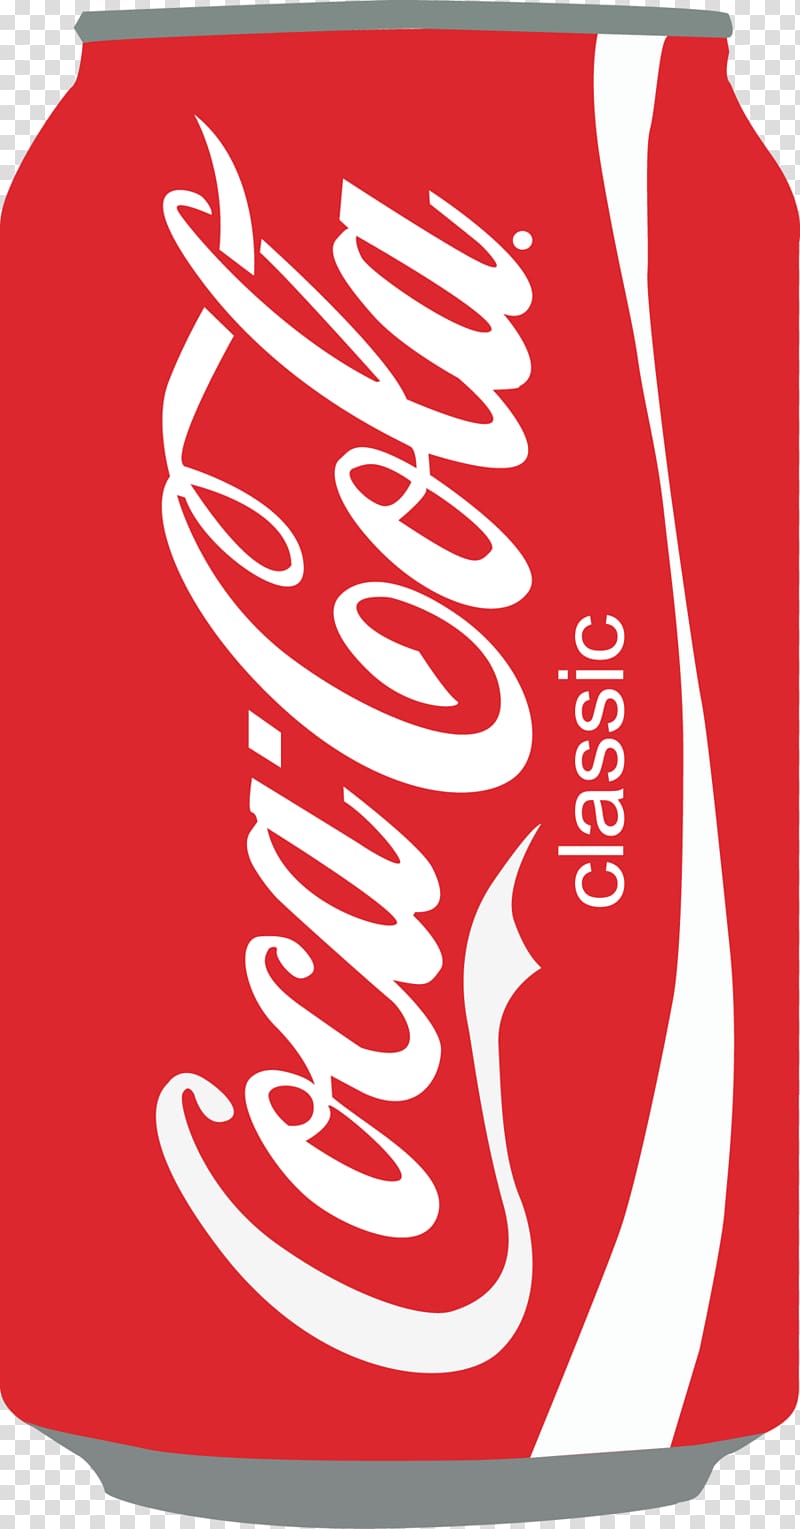 Coca-Cola can illustration, Coca-Cola Fizzy Drinks Diet Coke Pepsi ...